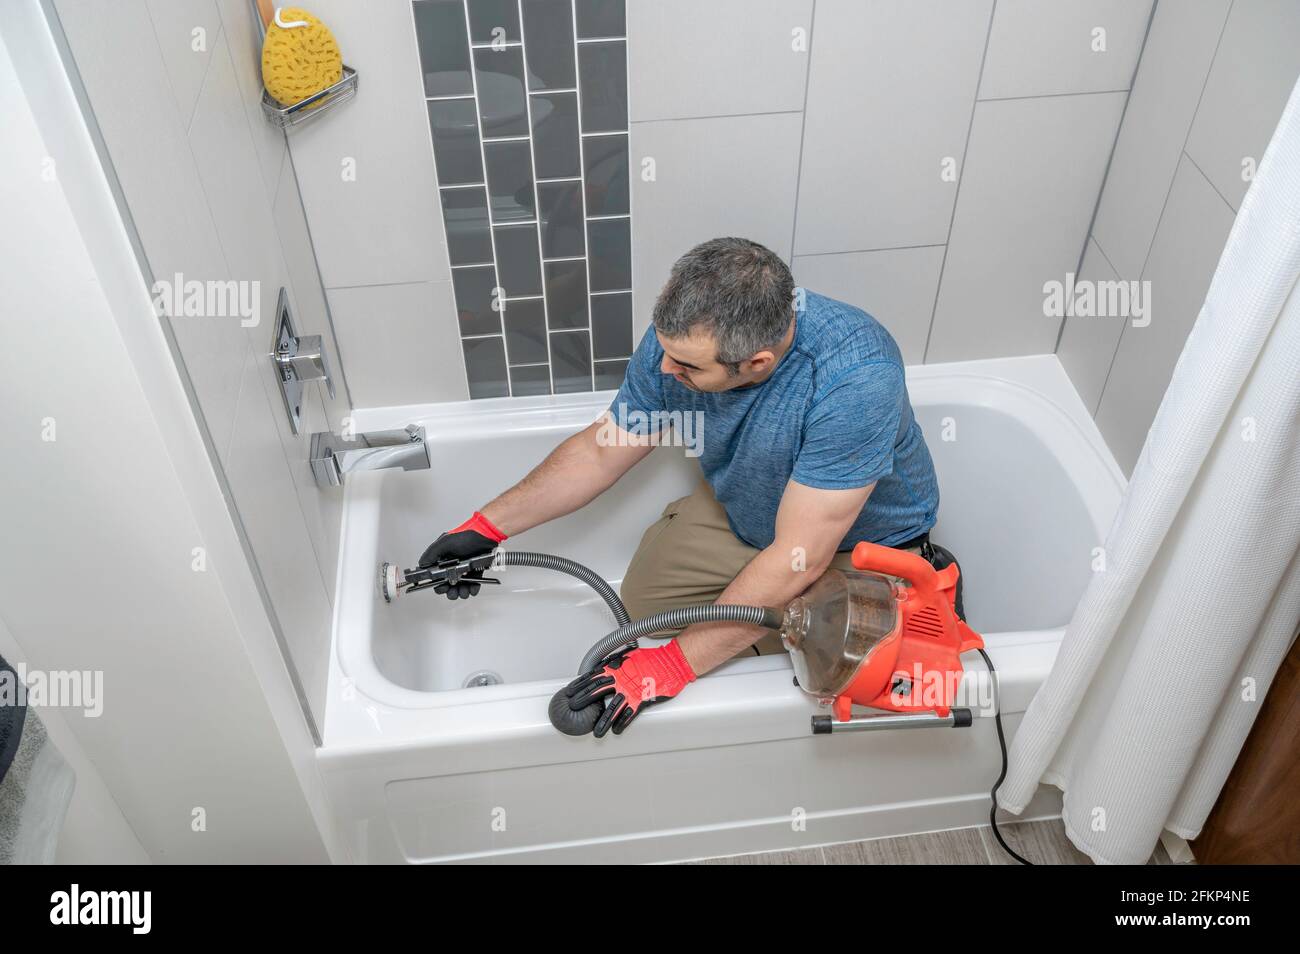 https://c8.alamy.com/comp/2FKP4NE/plumber-drain-cleaning-a-bathtub-with-a-plumbers-snake-2FKP4NE.jpg